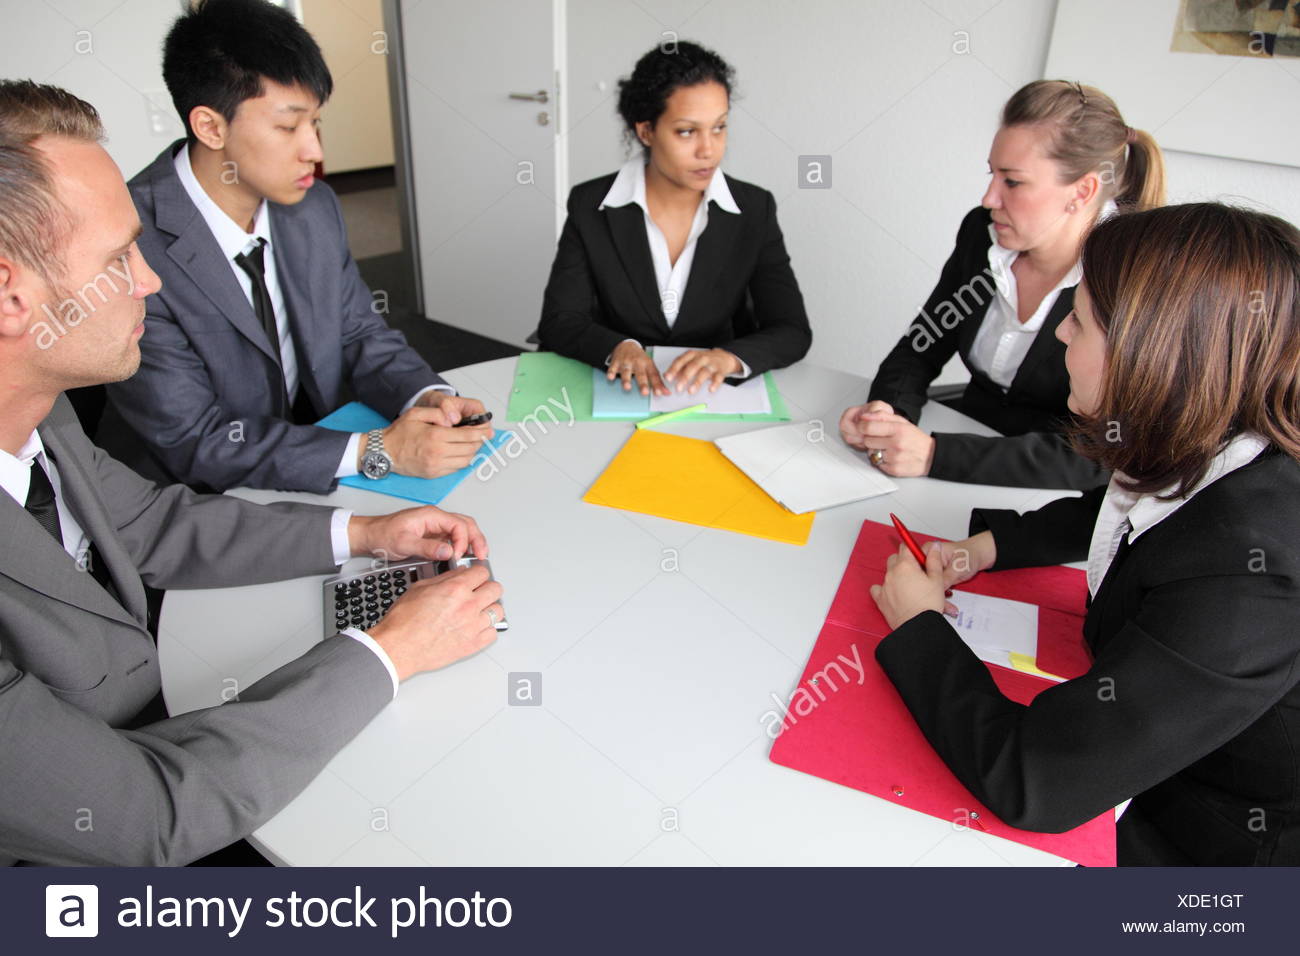 Serious Business Meeting Stock Photo